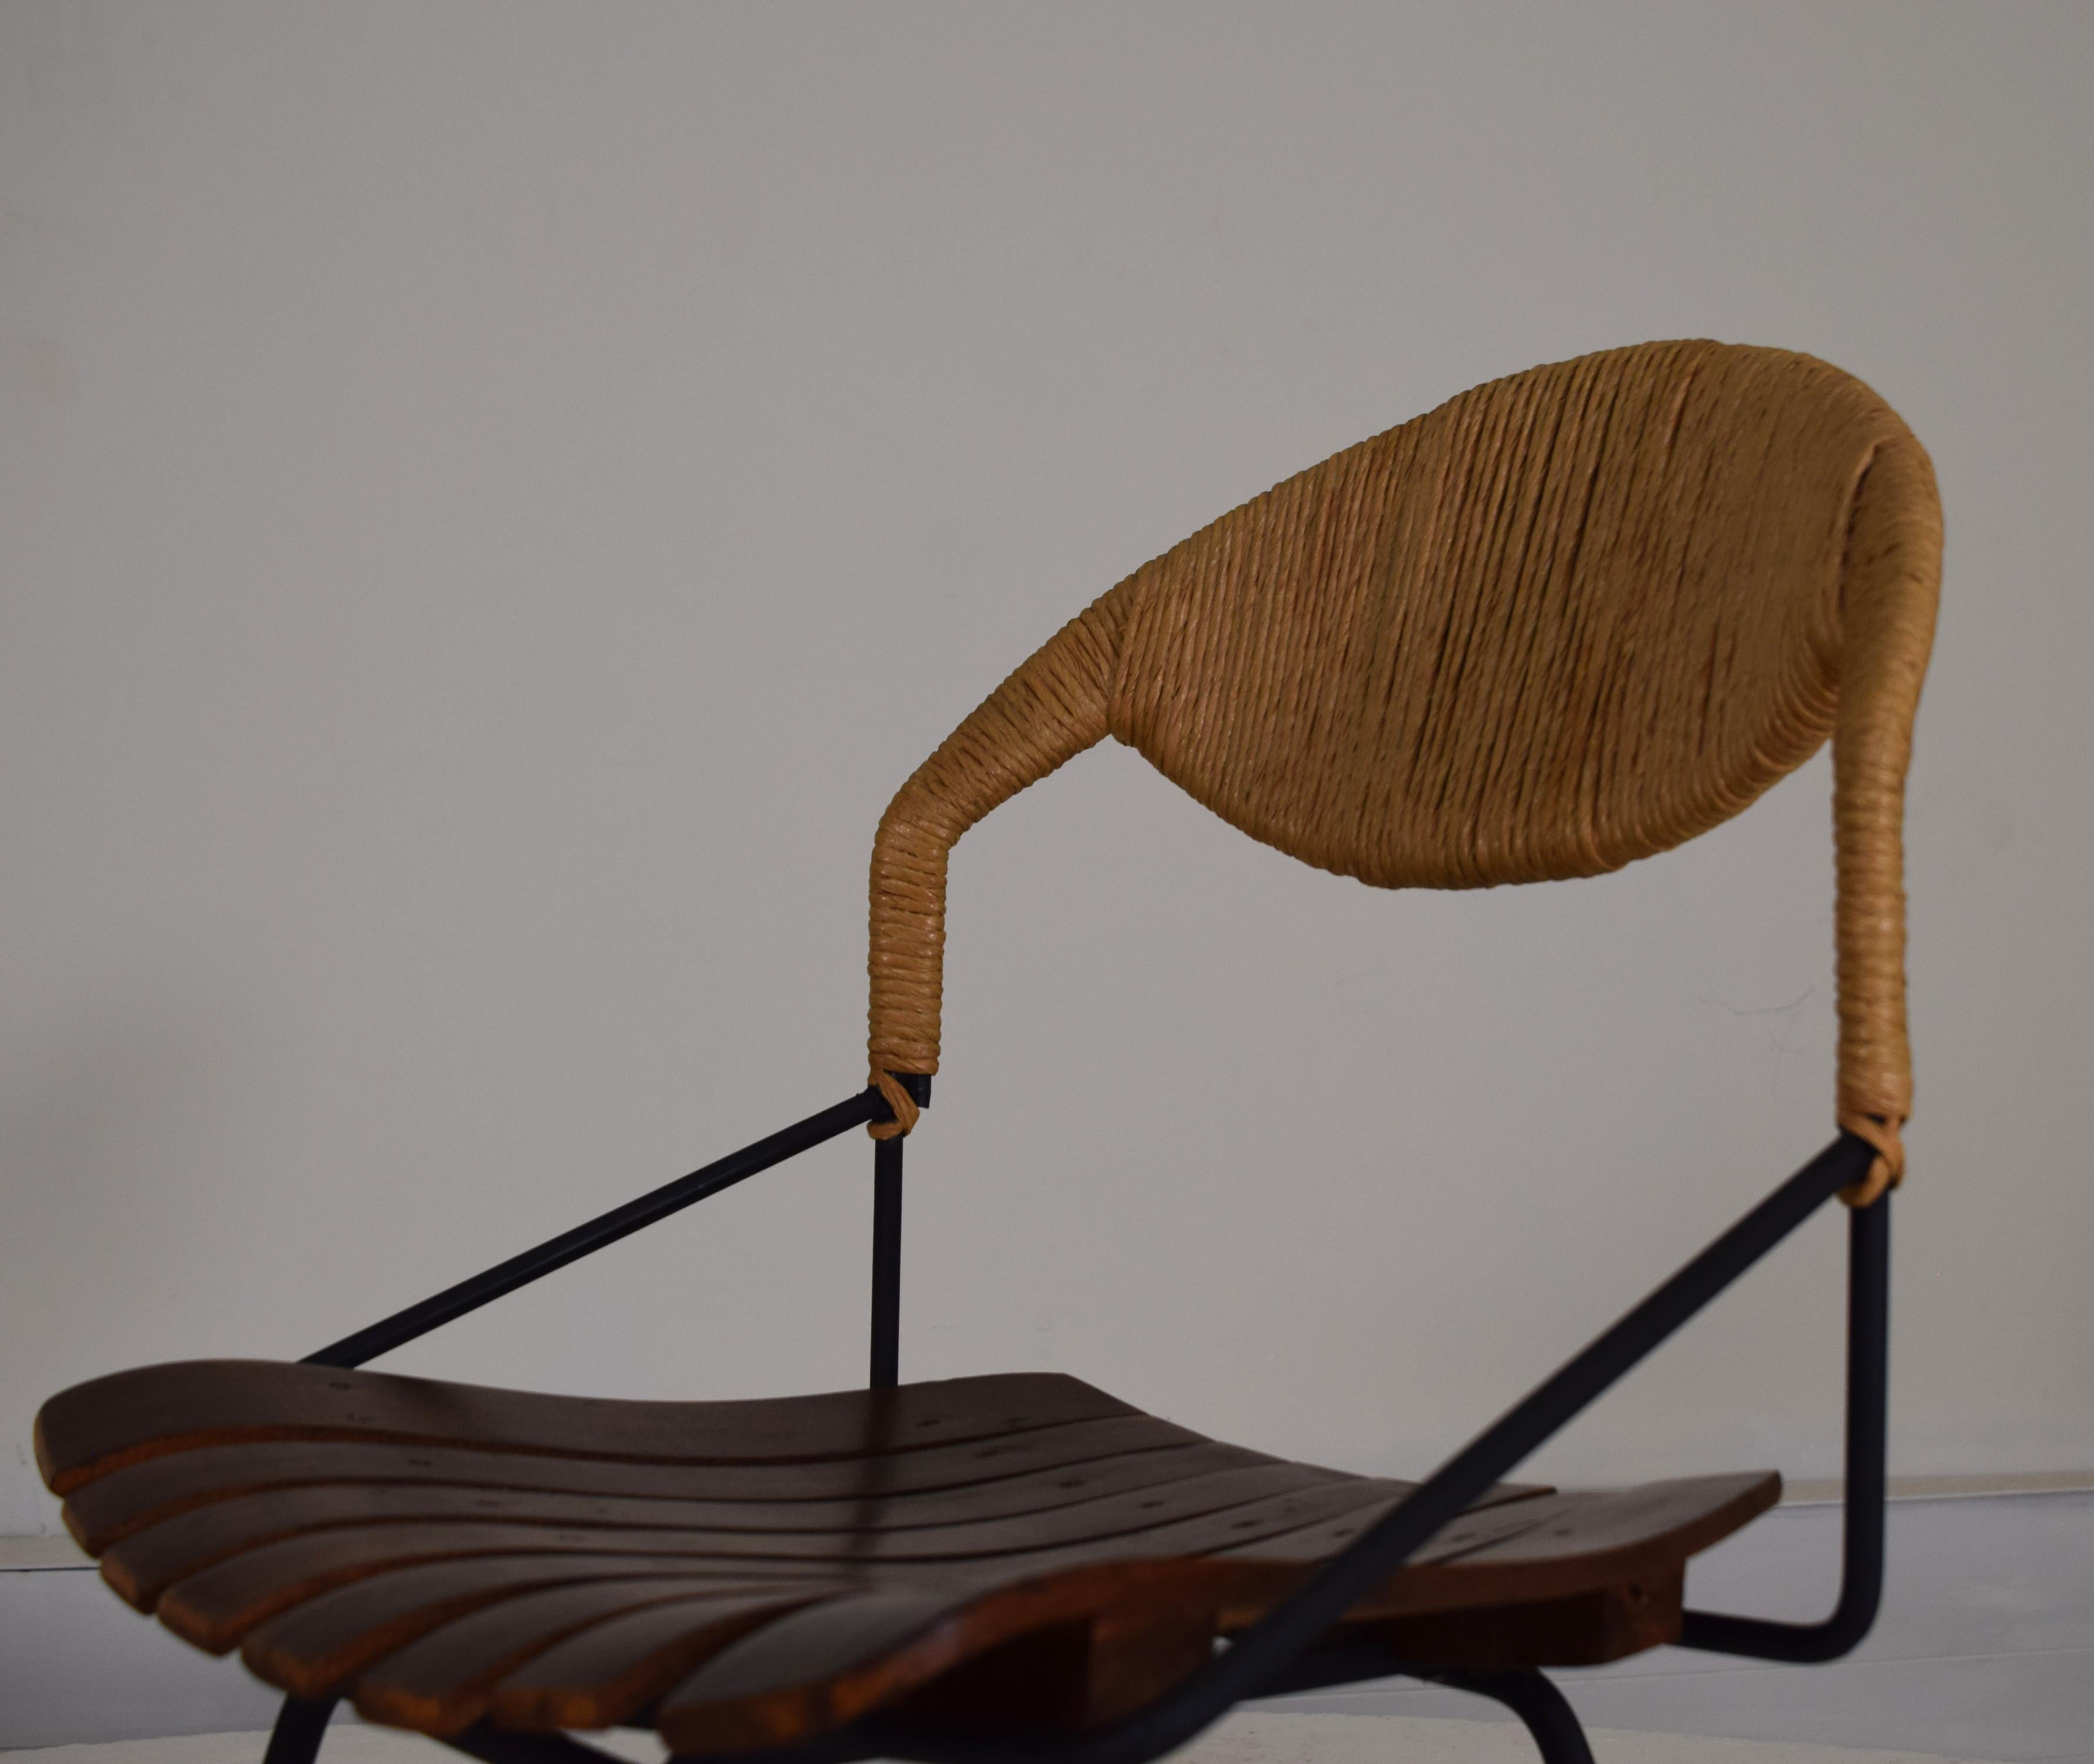 Pair of Arthur Umanoff Chairs 1